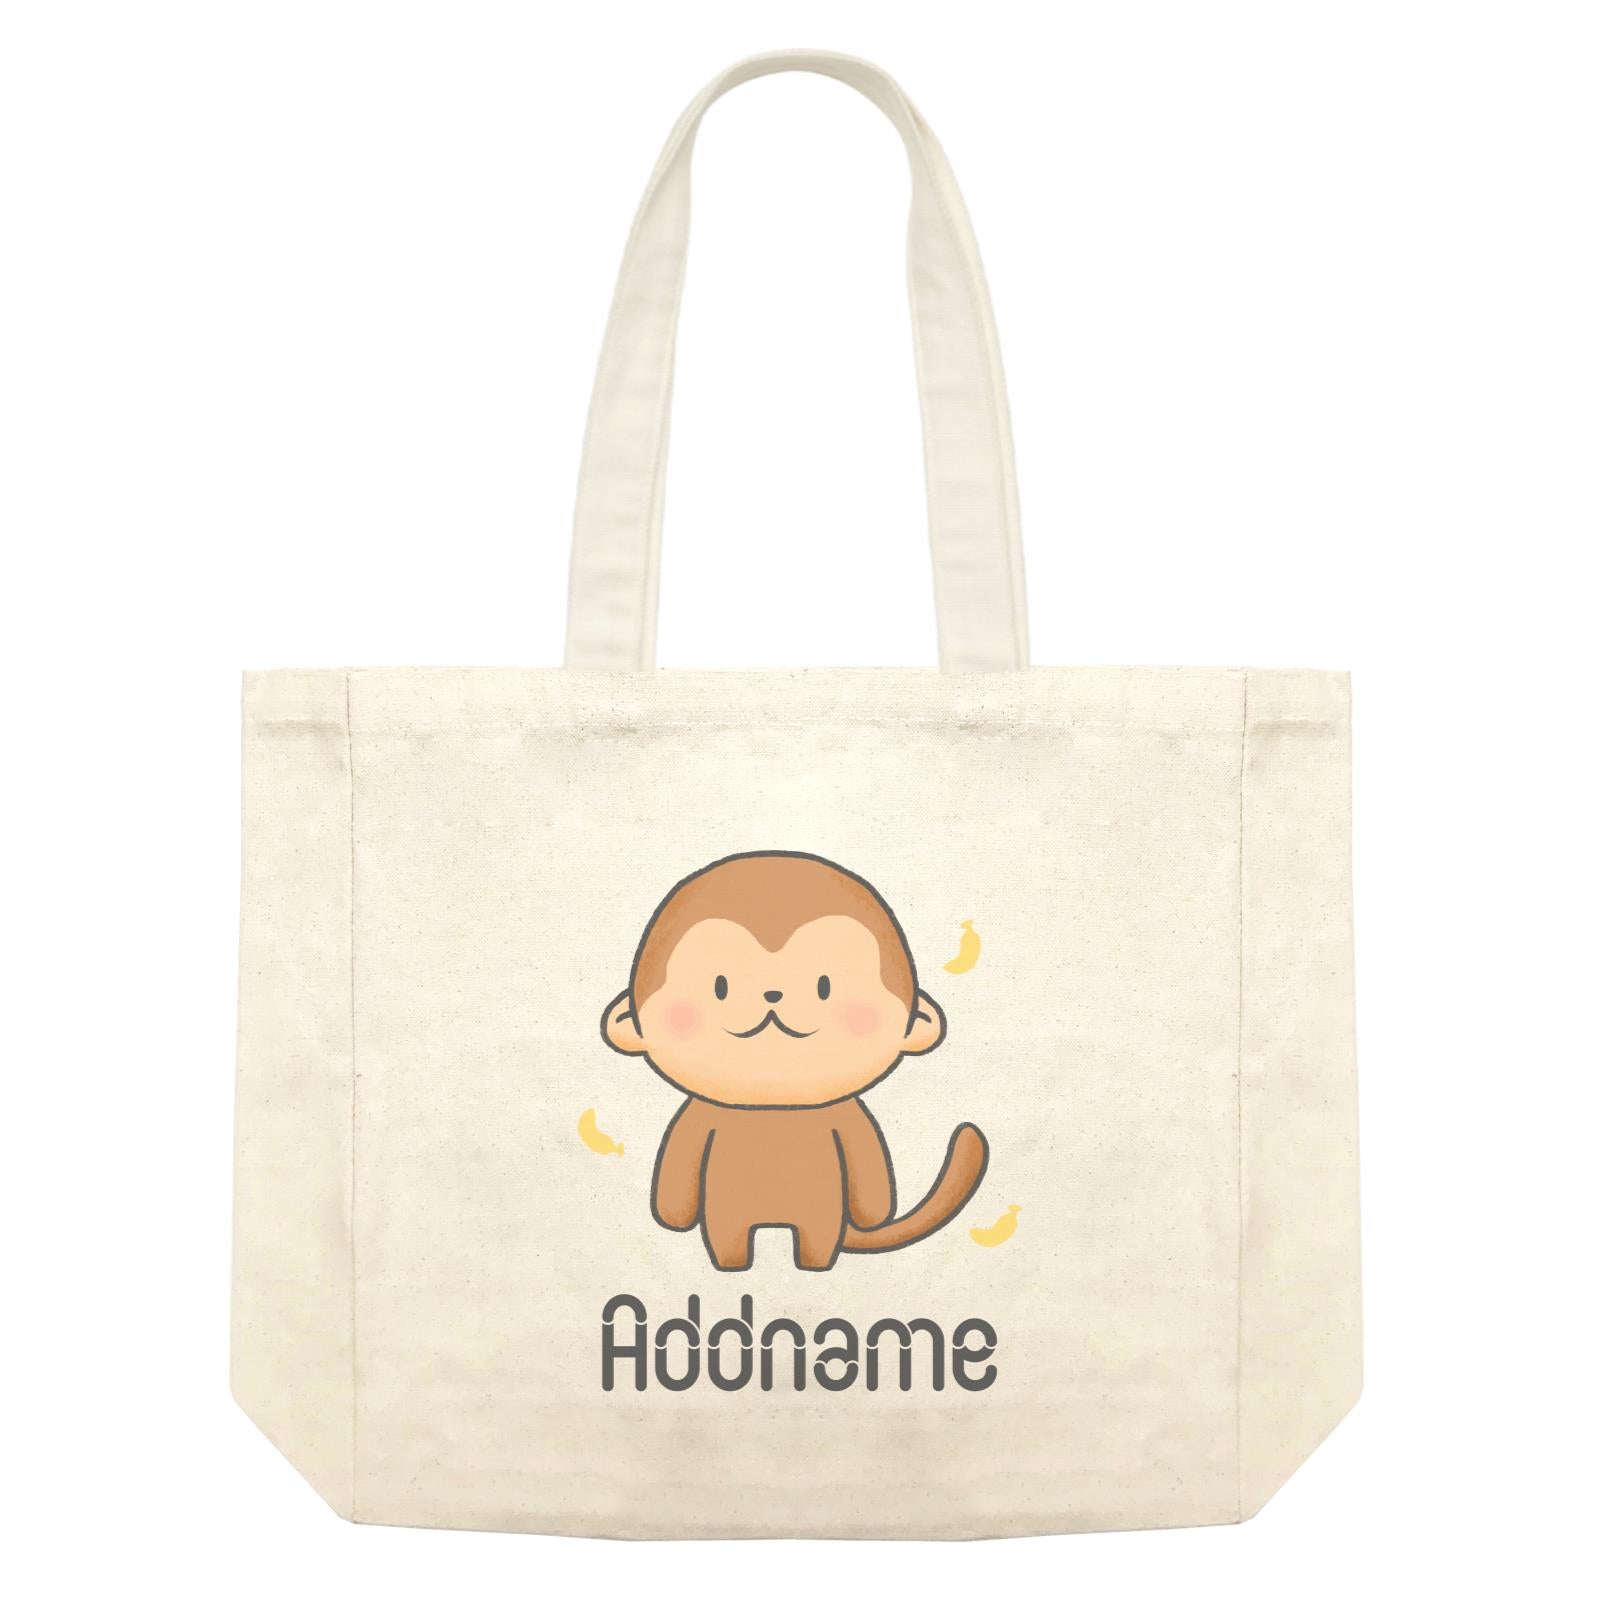 Cute Hand Drawn Style Monkey Addname Shopping Bag